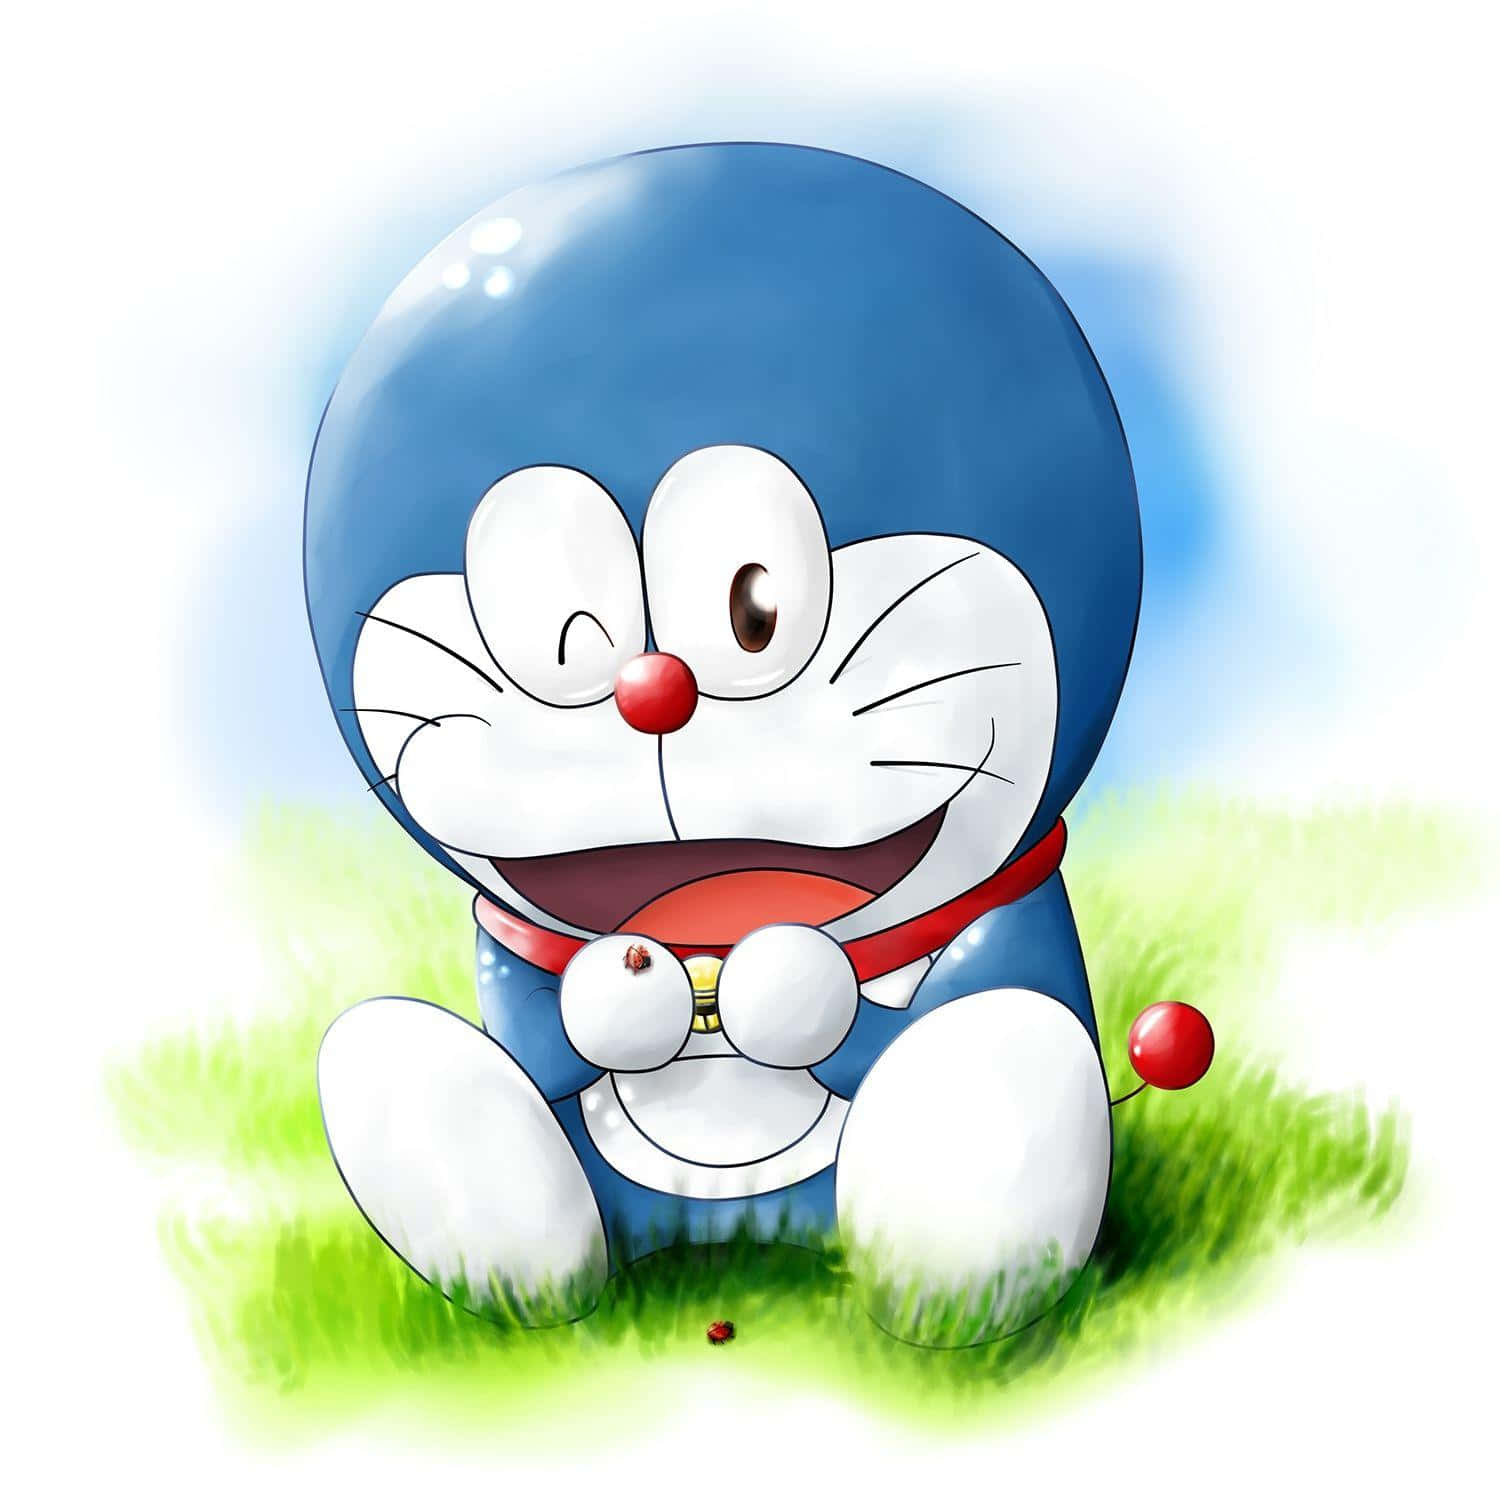 “Doraemon Smiling Brightly - The Lovable Cartoon Robot!”